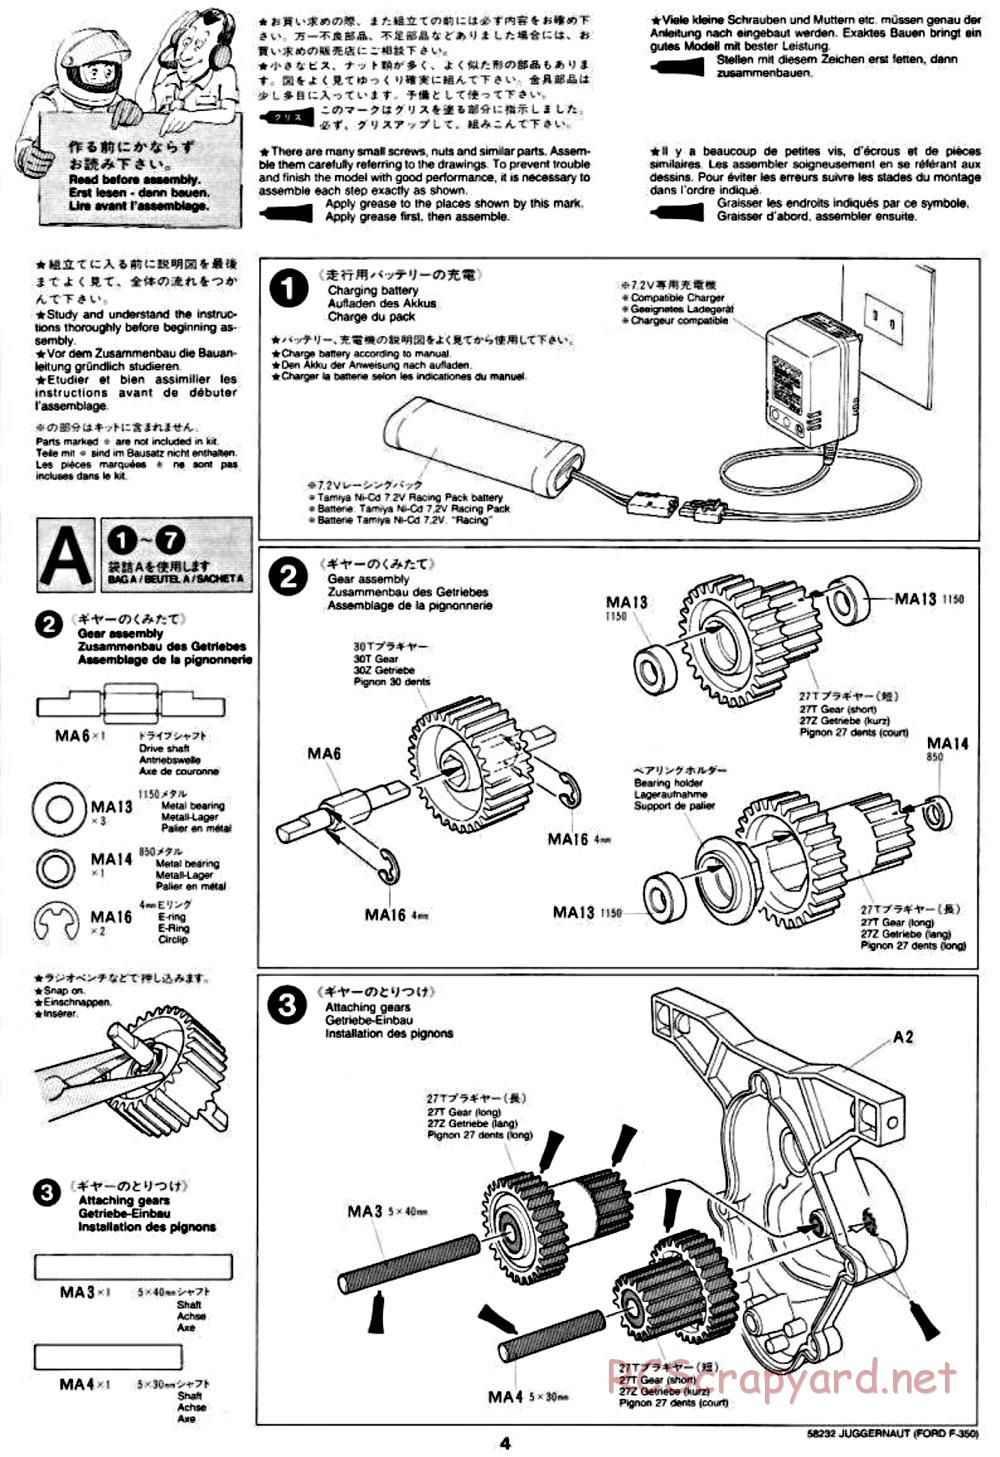 Tamiya - Juggernaut Chassis - Manual - Page 4